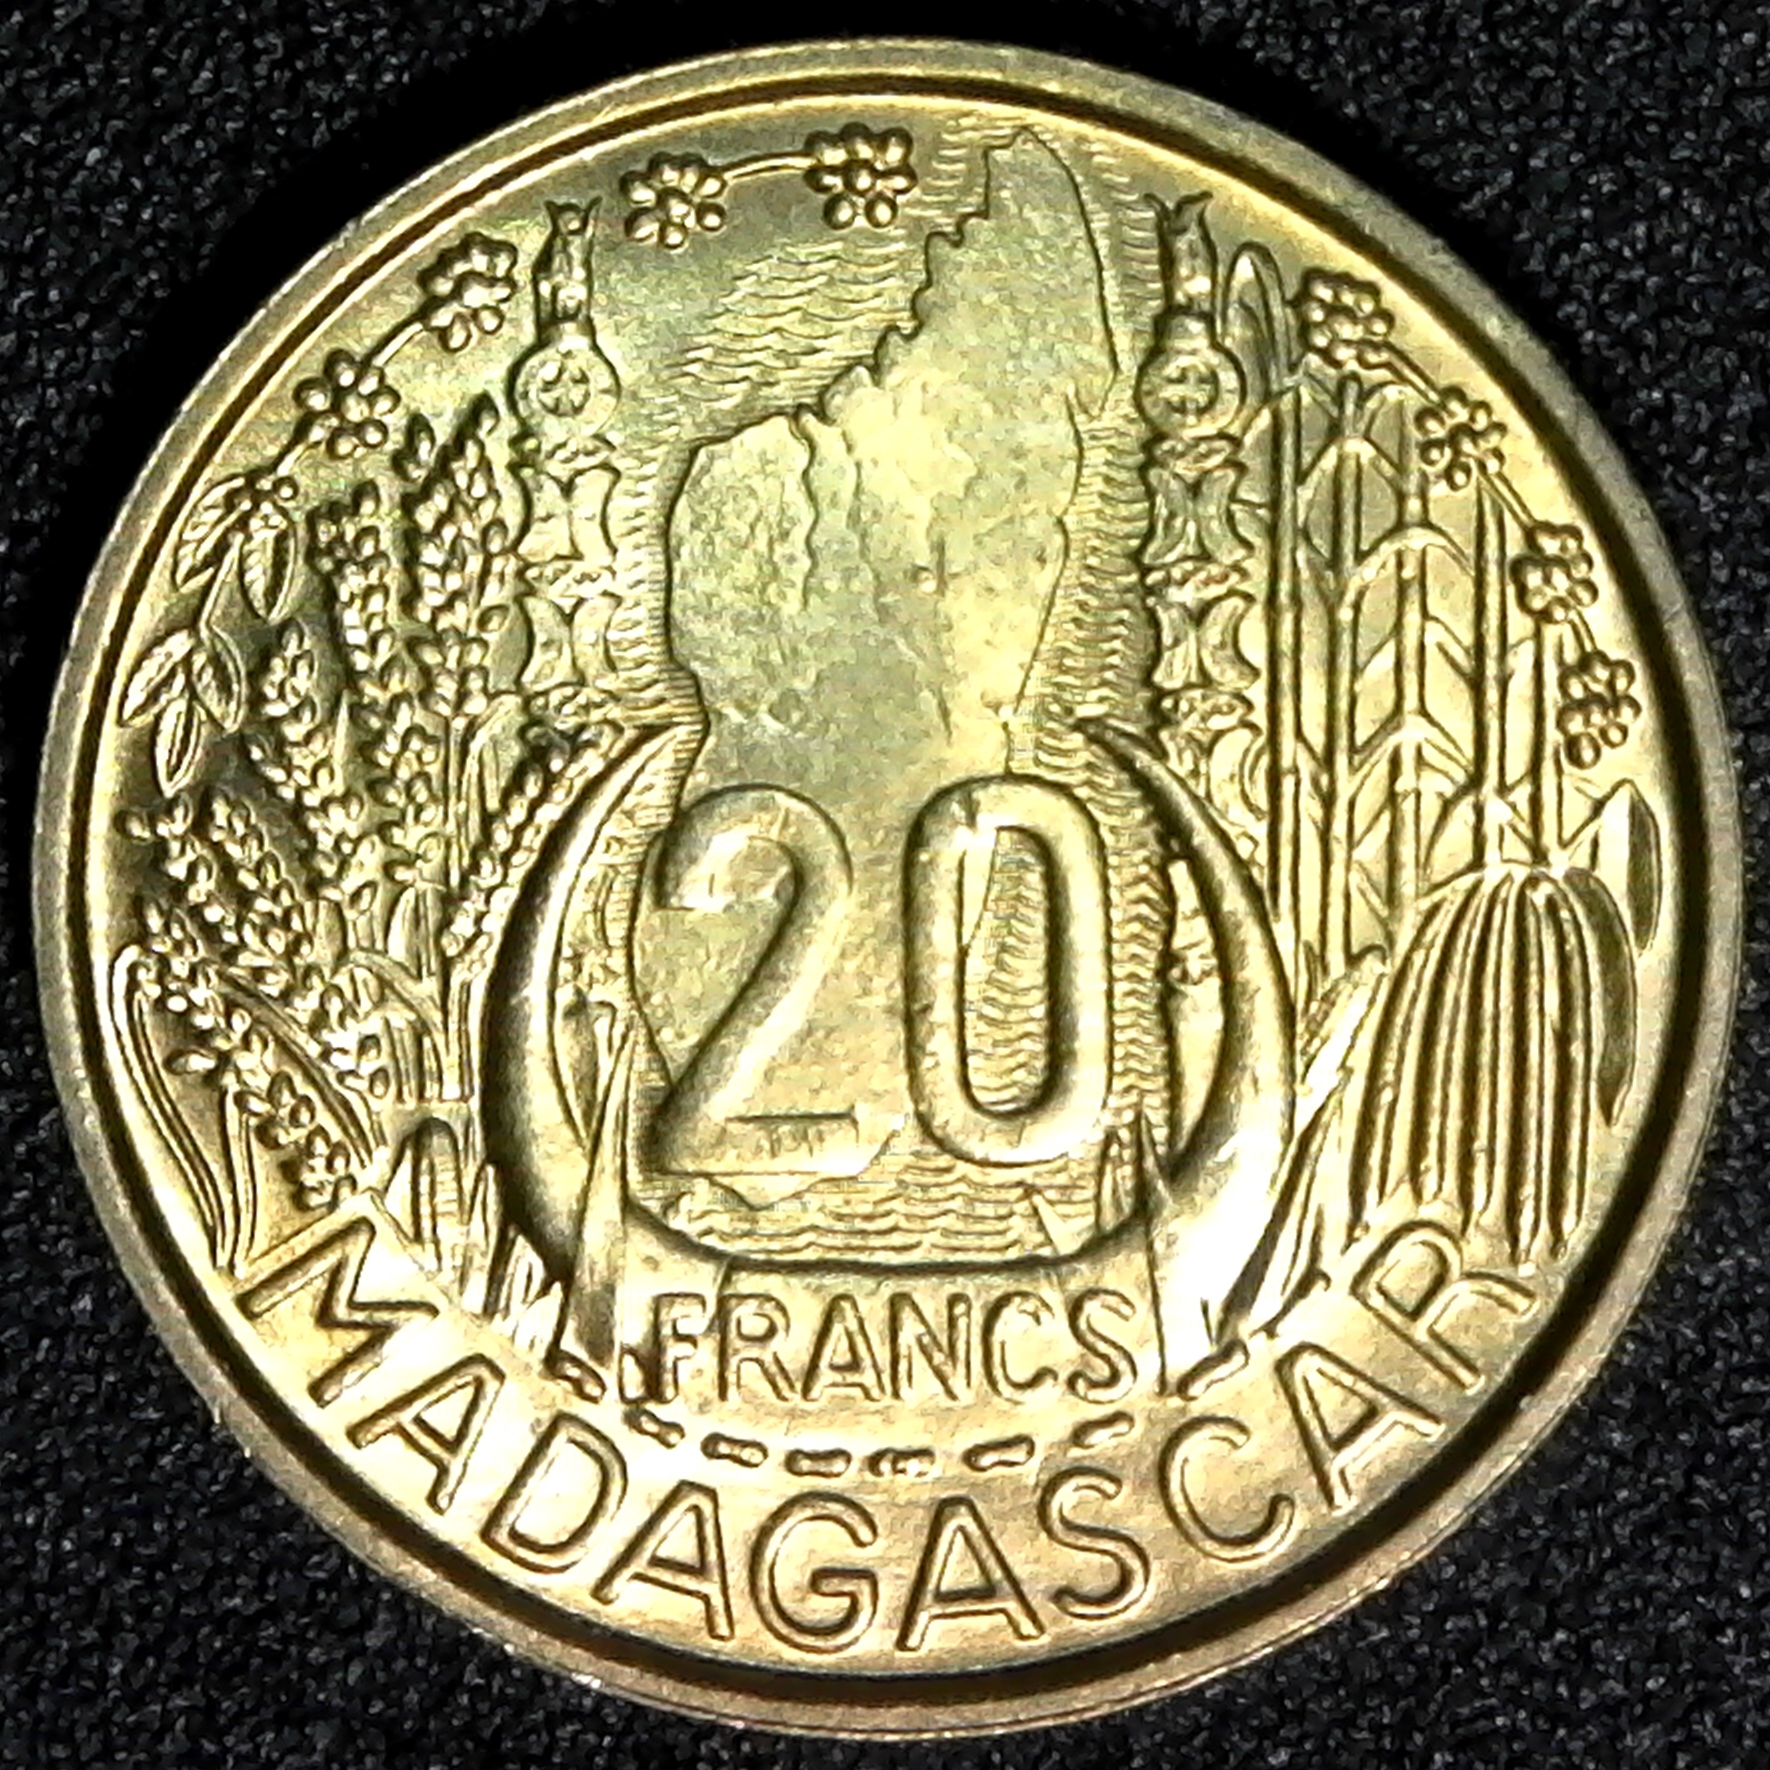 Madagascar 20 francs 1953 obv.jpg